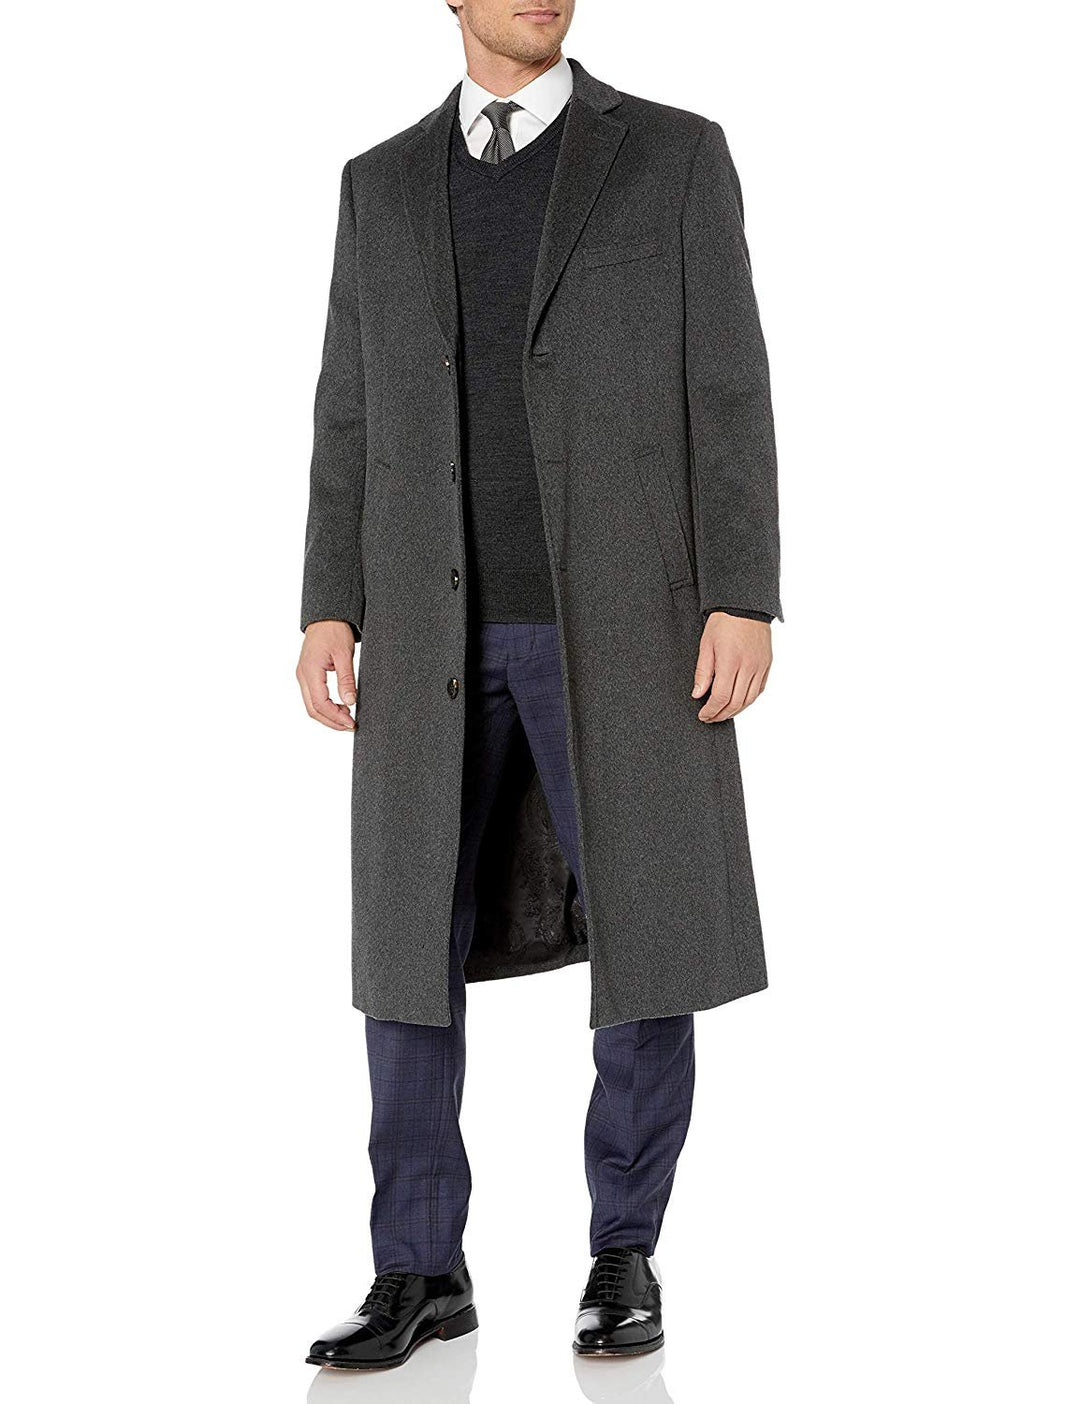 Adam Baker Men's Overcoat Single Breasted Luxury Wool/Cashmere Full Length Topcoat